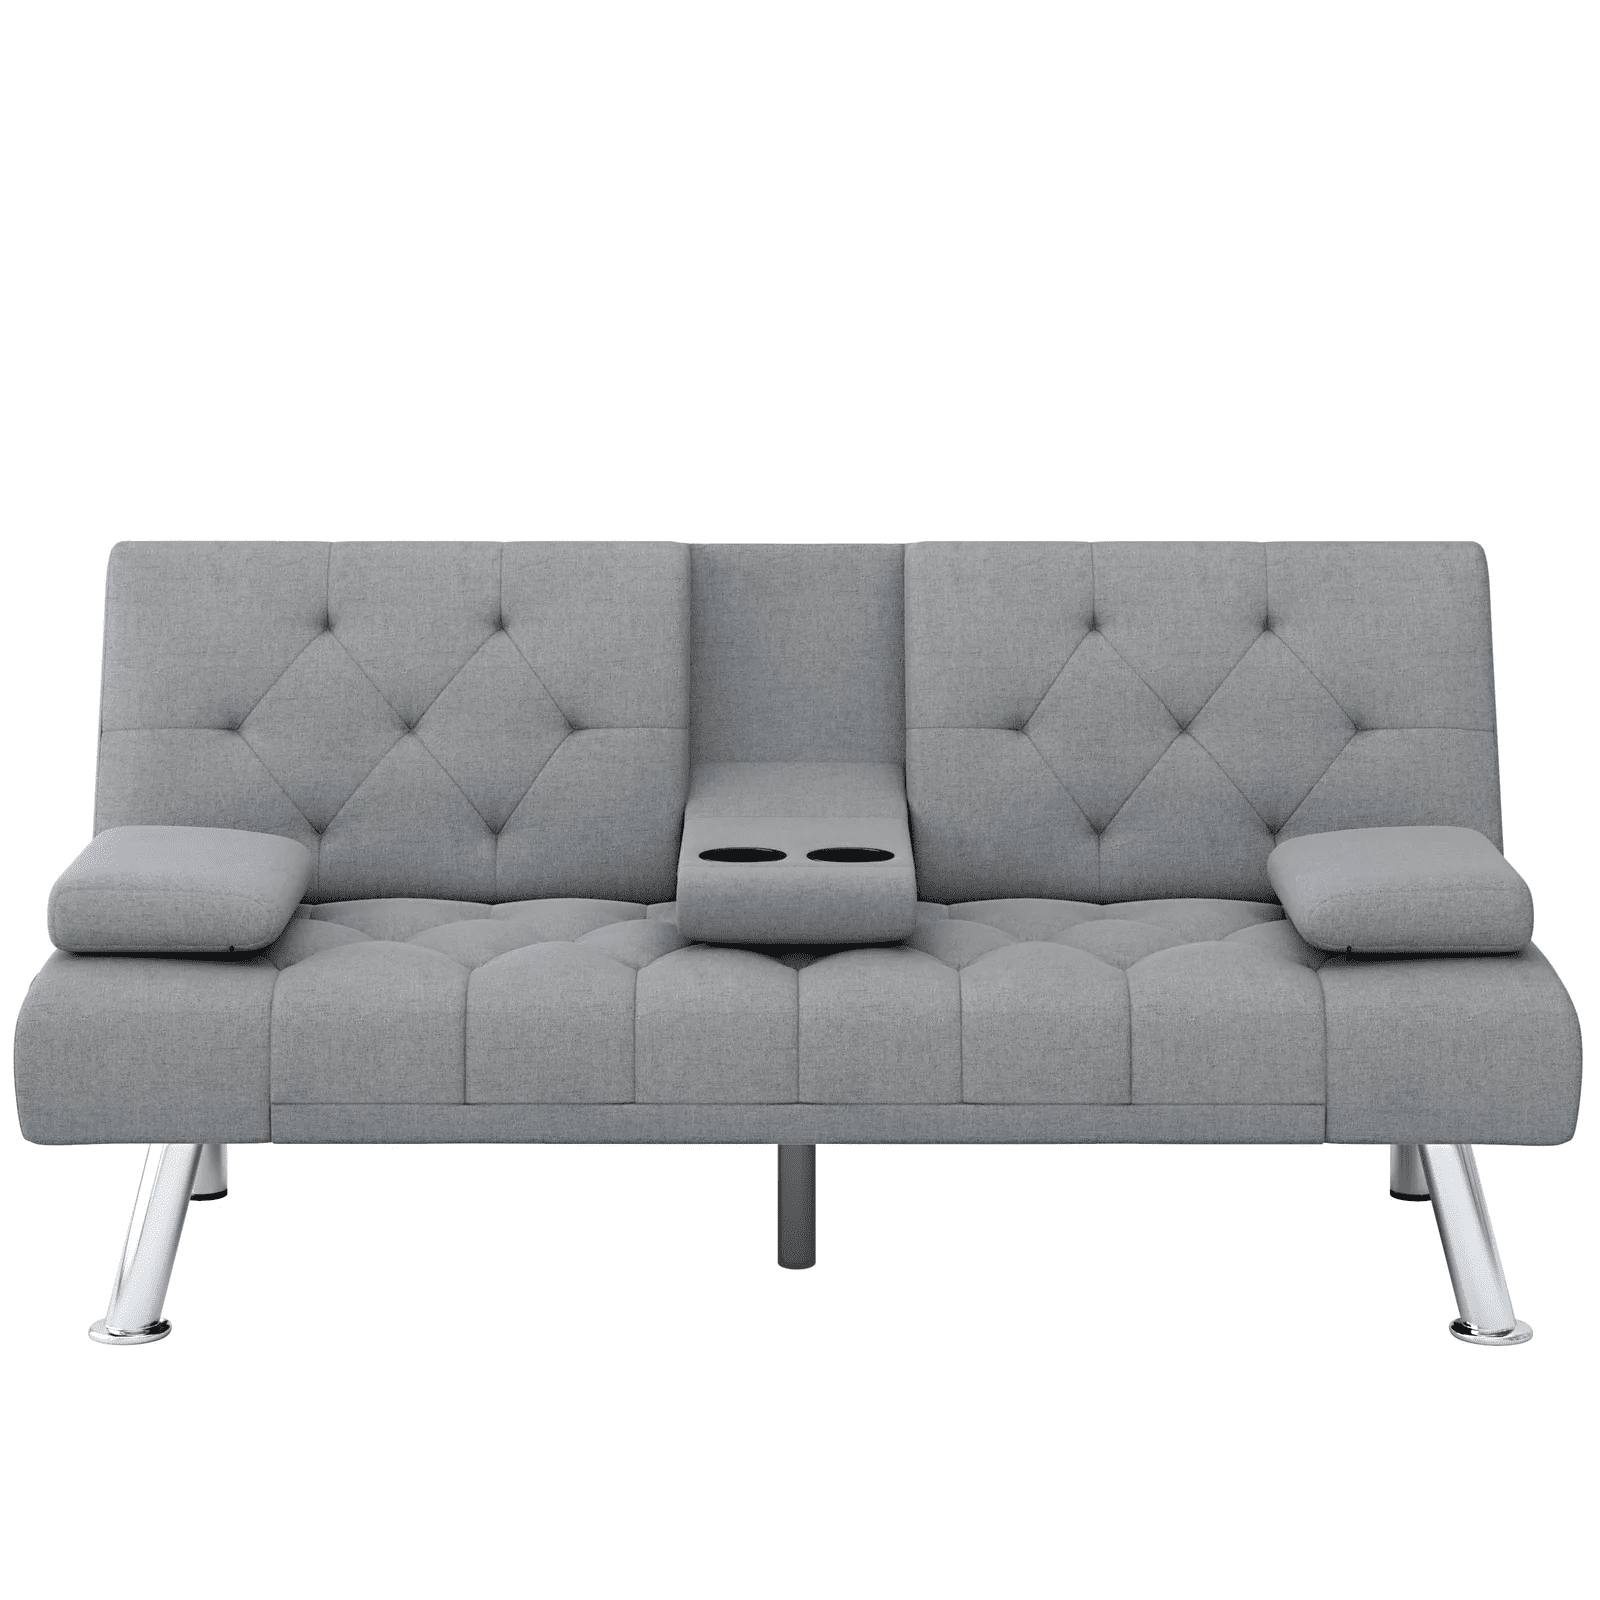 Homfa Convertible Futon Sofa Bed 66 3